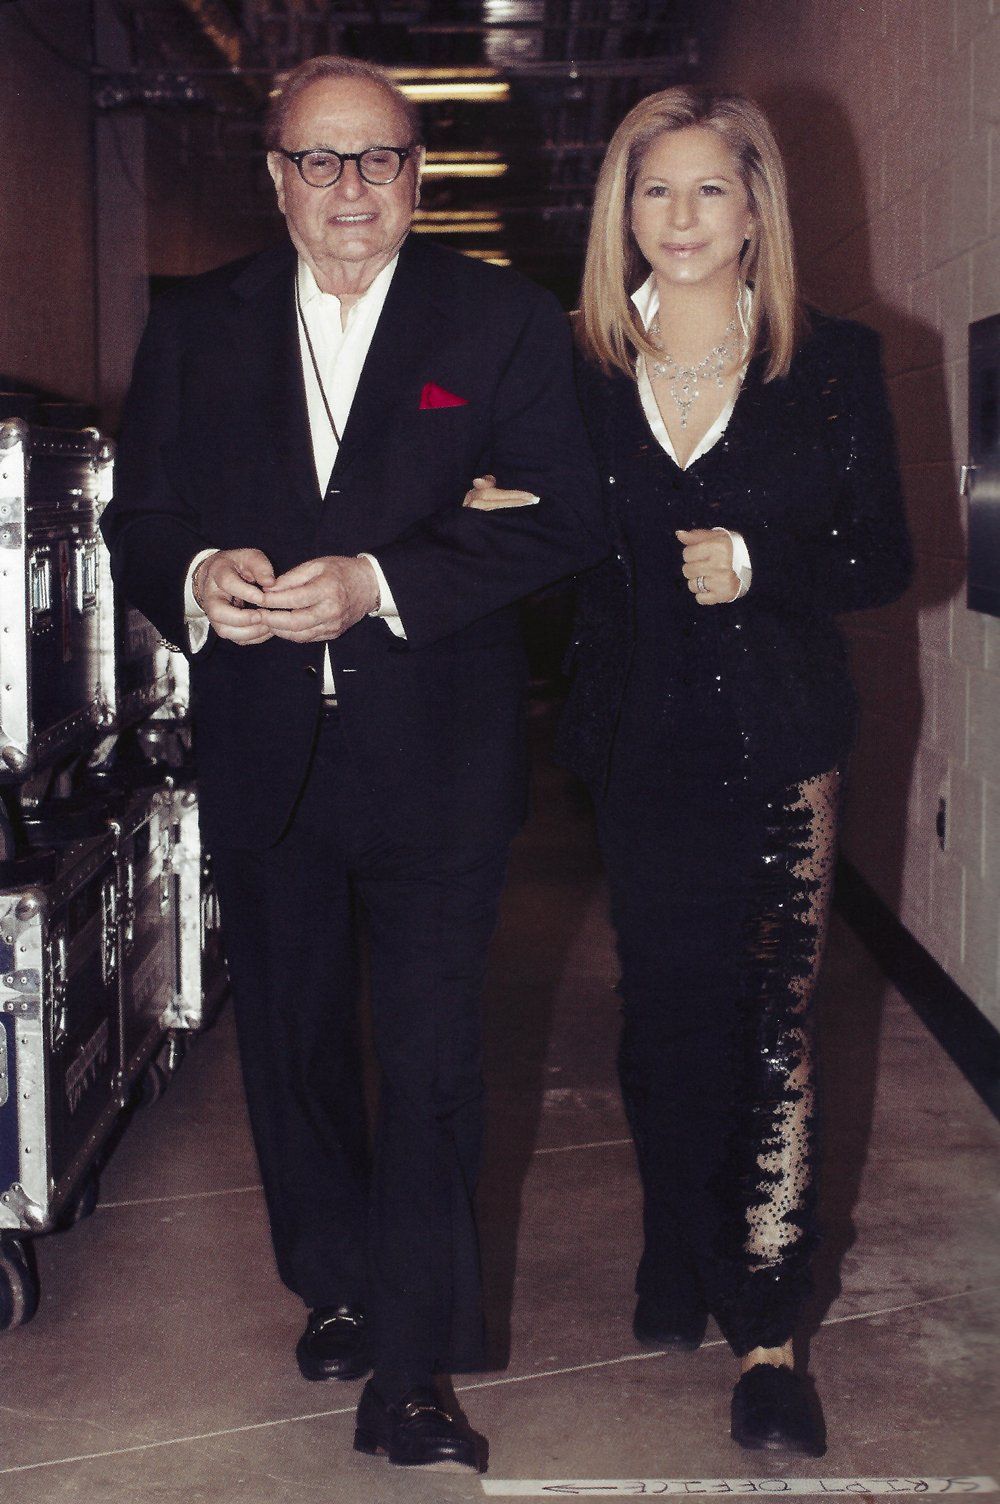 Marty Erlichman and Barbra Streisand backstage in Brooklyn.